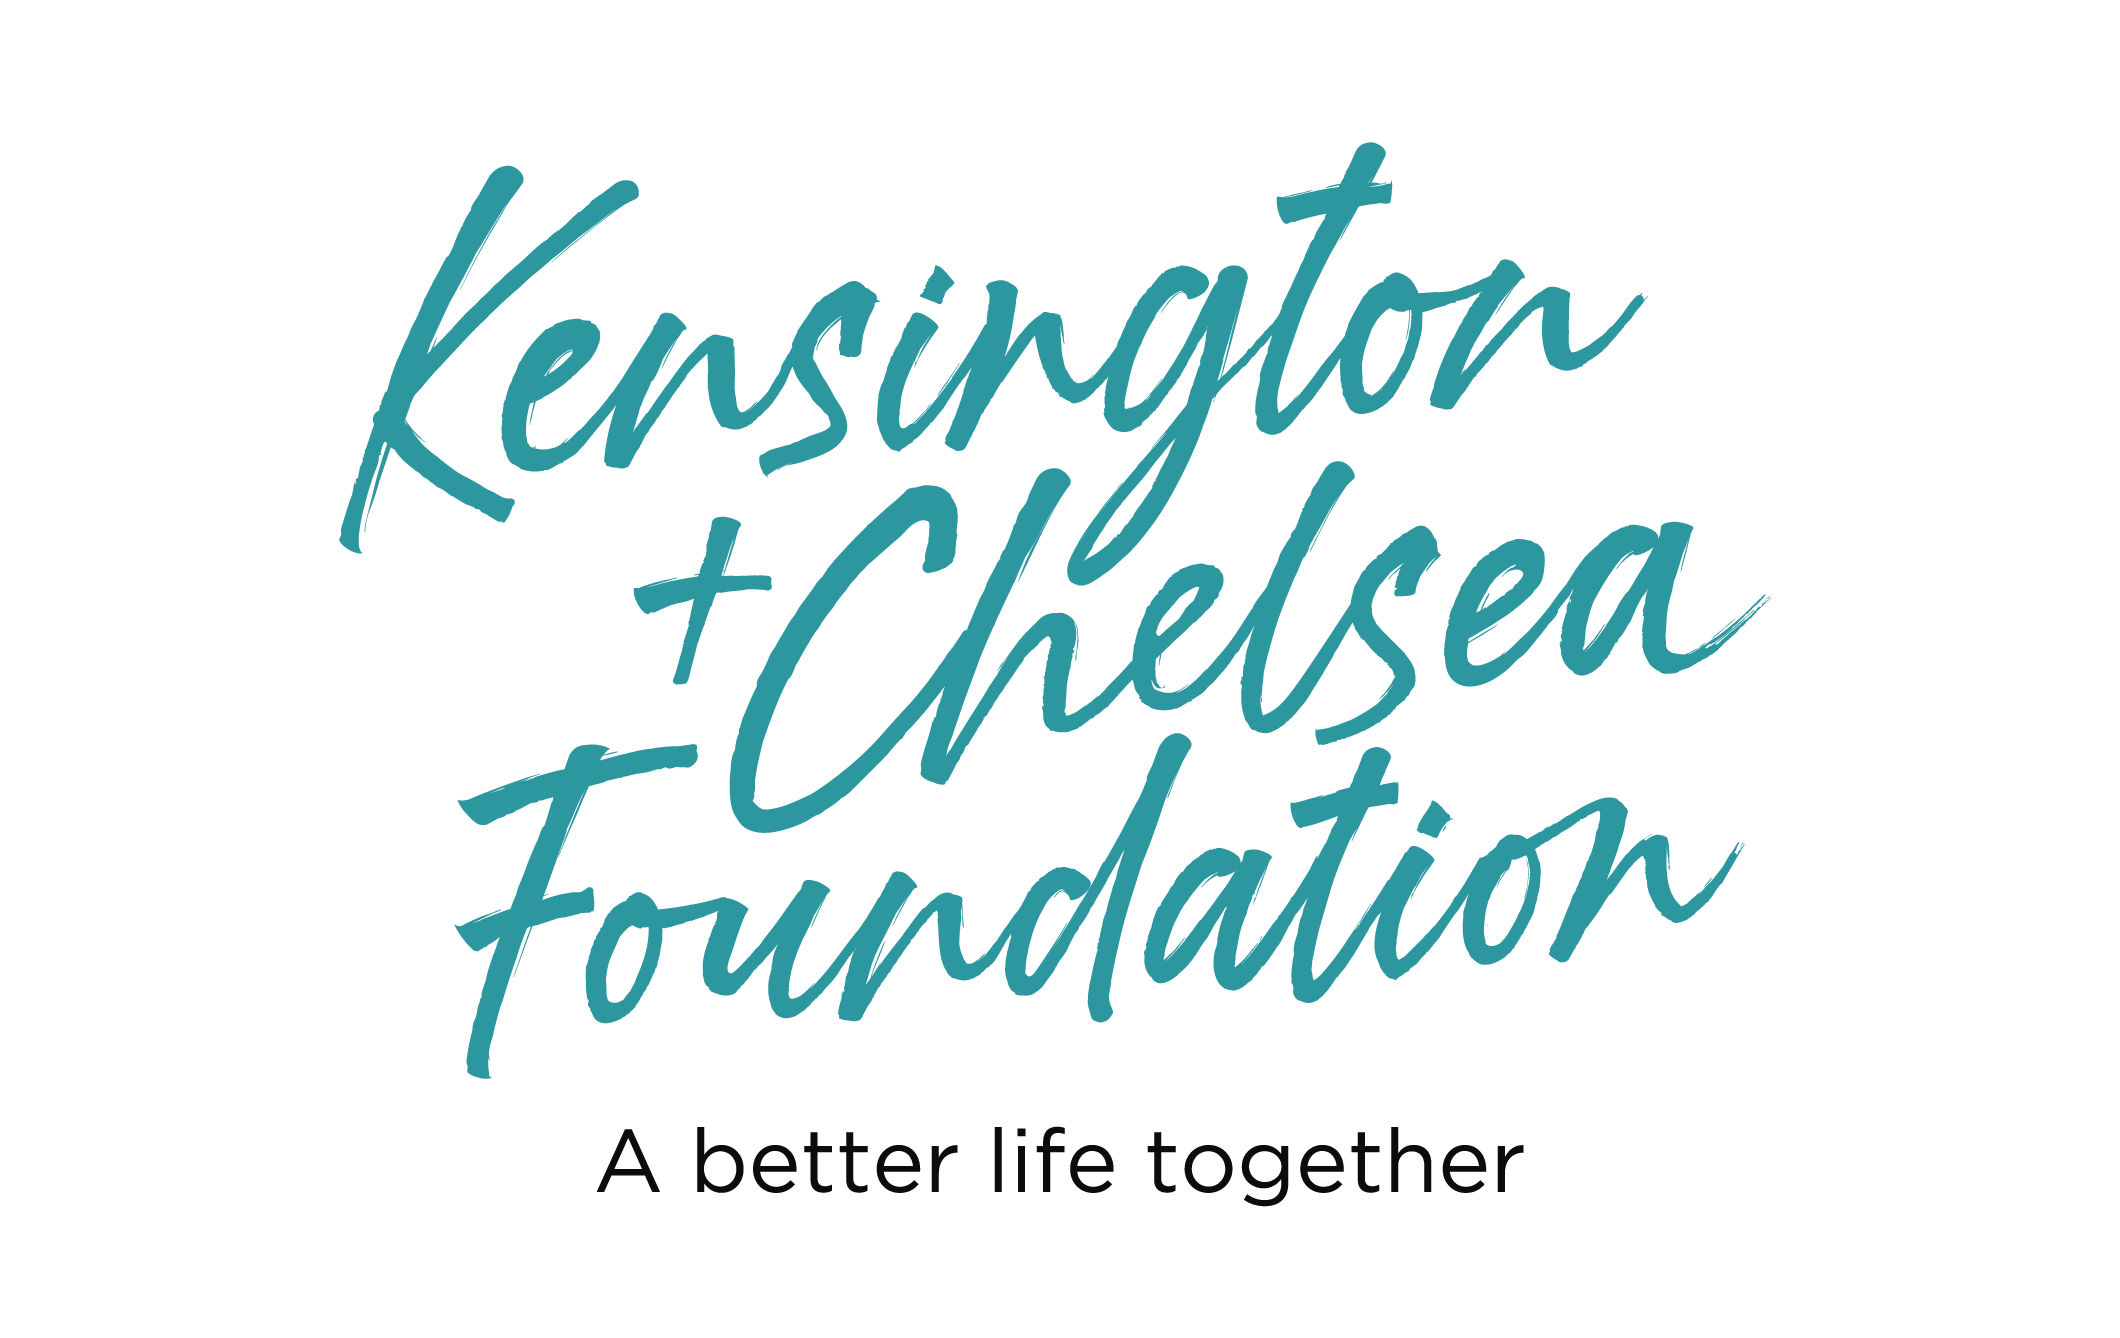 Kensington Chelsea Foundation Teal RGB.png